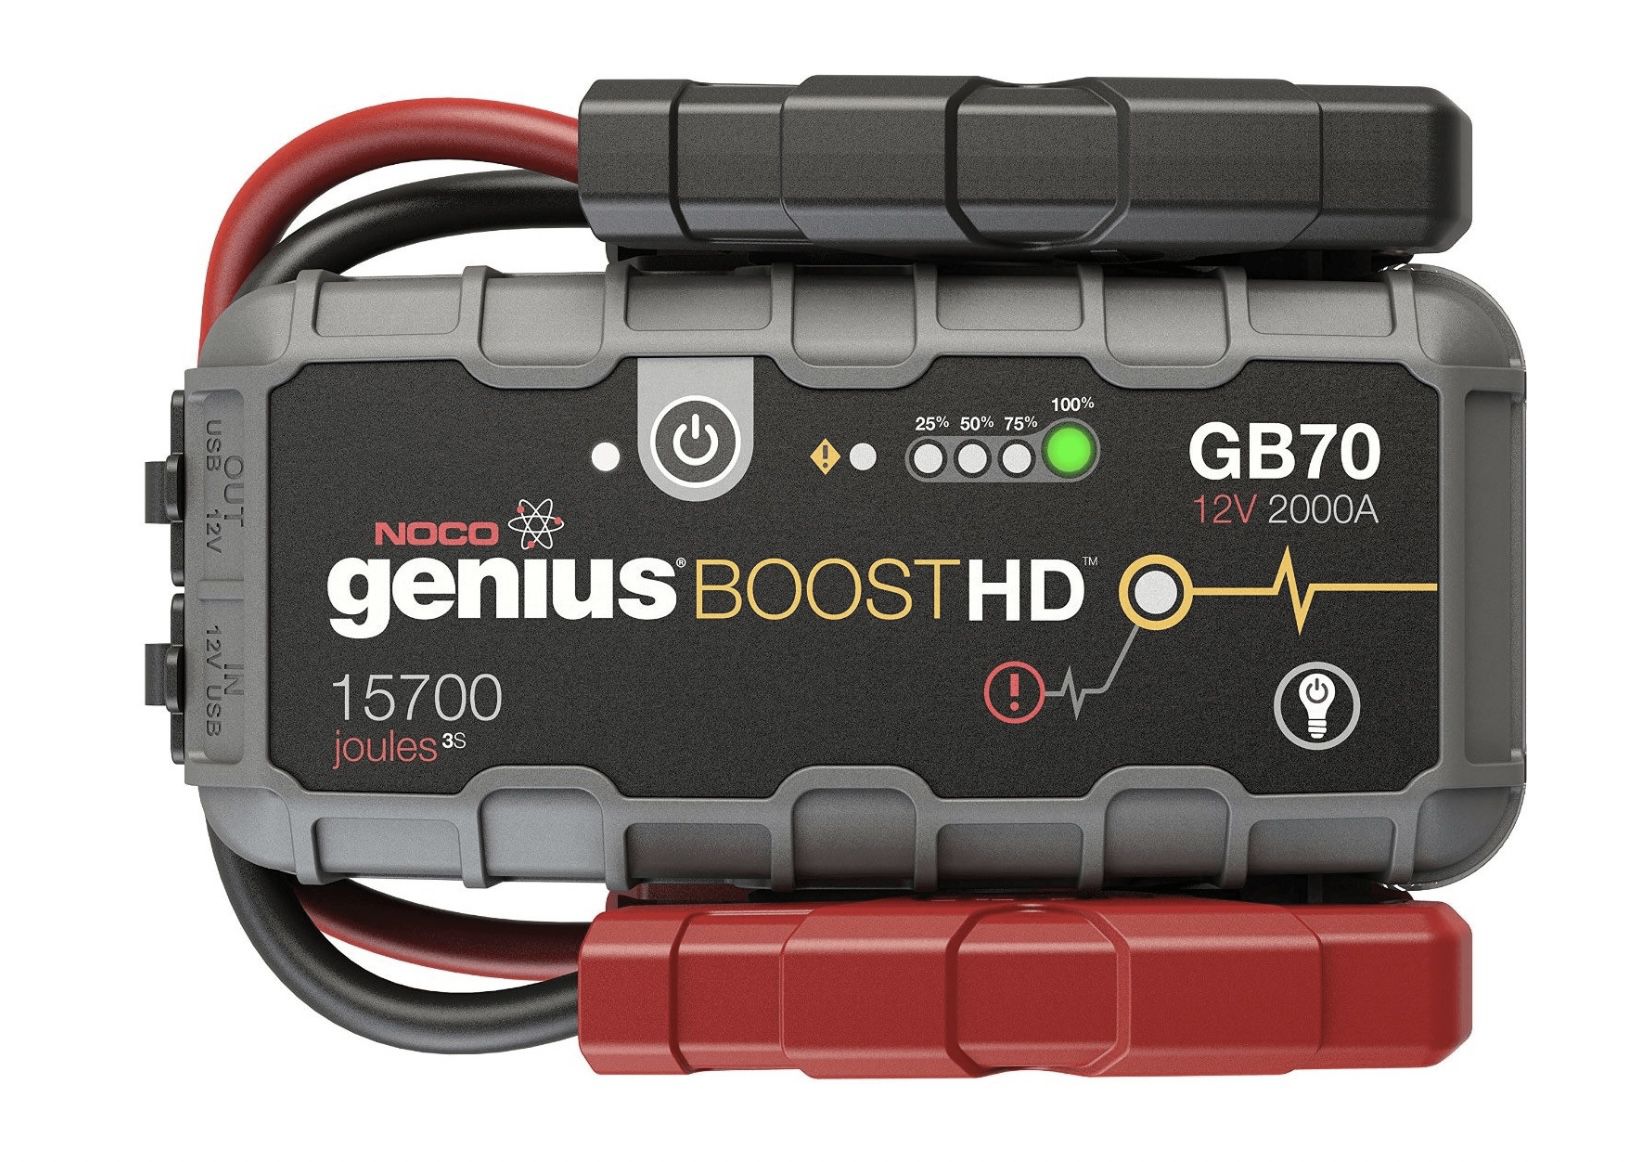 NOCO Boost HD GB70 2000A 12V UltraSafe Starthilfe für 165,98€ (statt 193€)